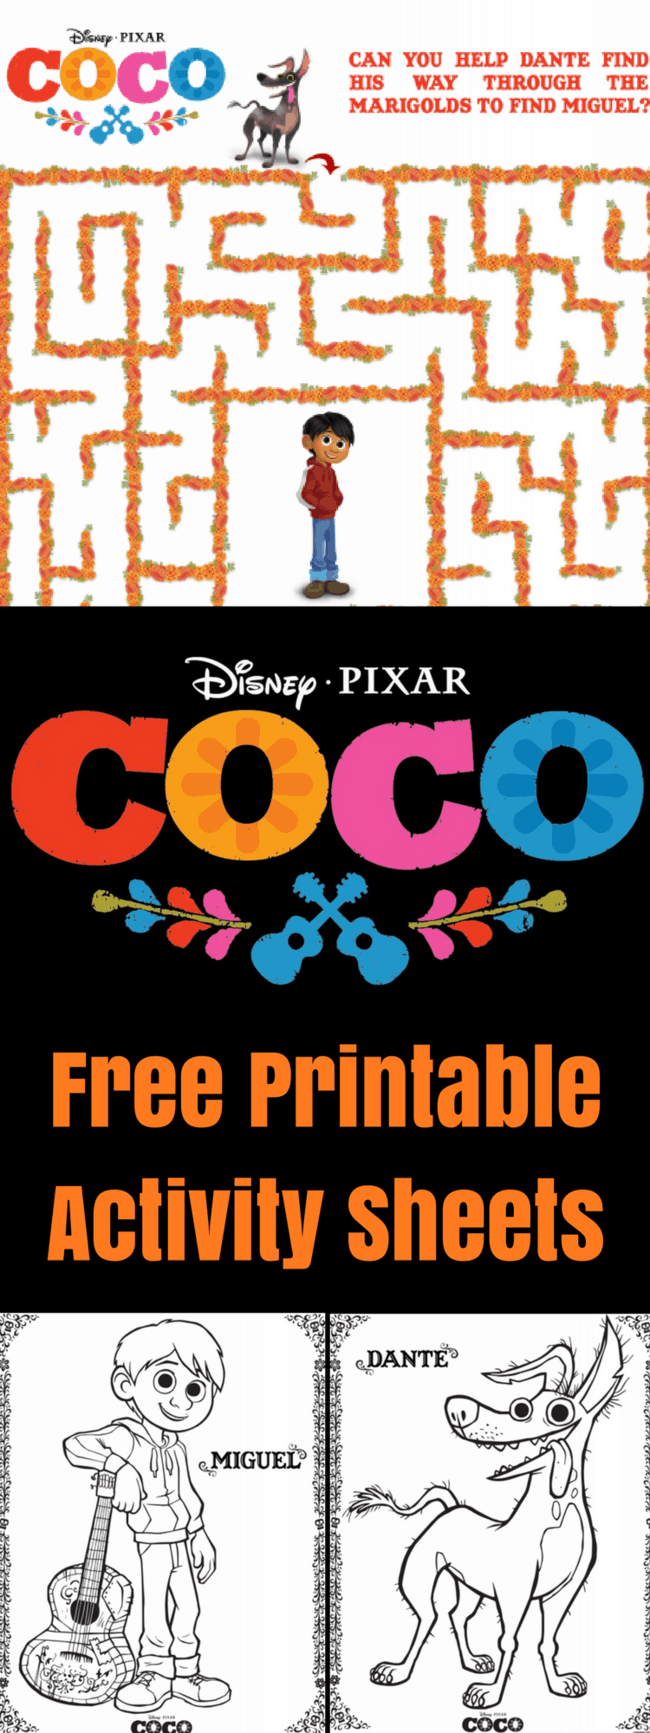 Disney Pixar's COCO Family Activity Sheets free printables!